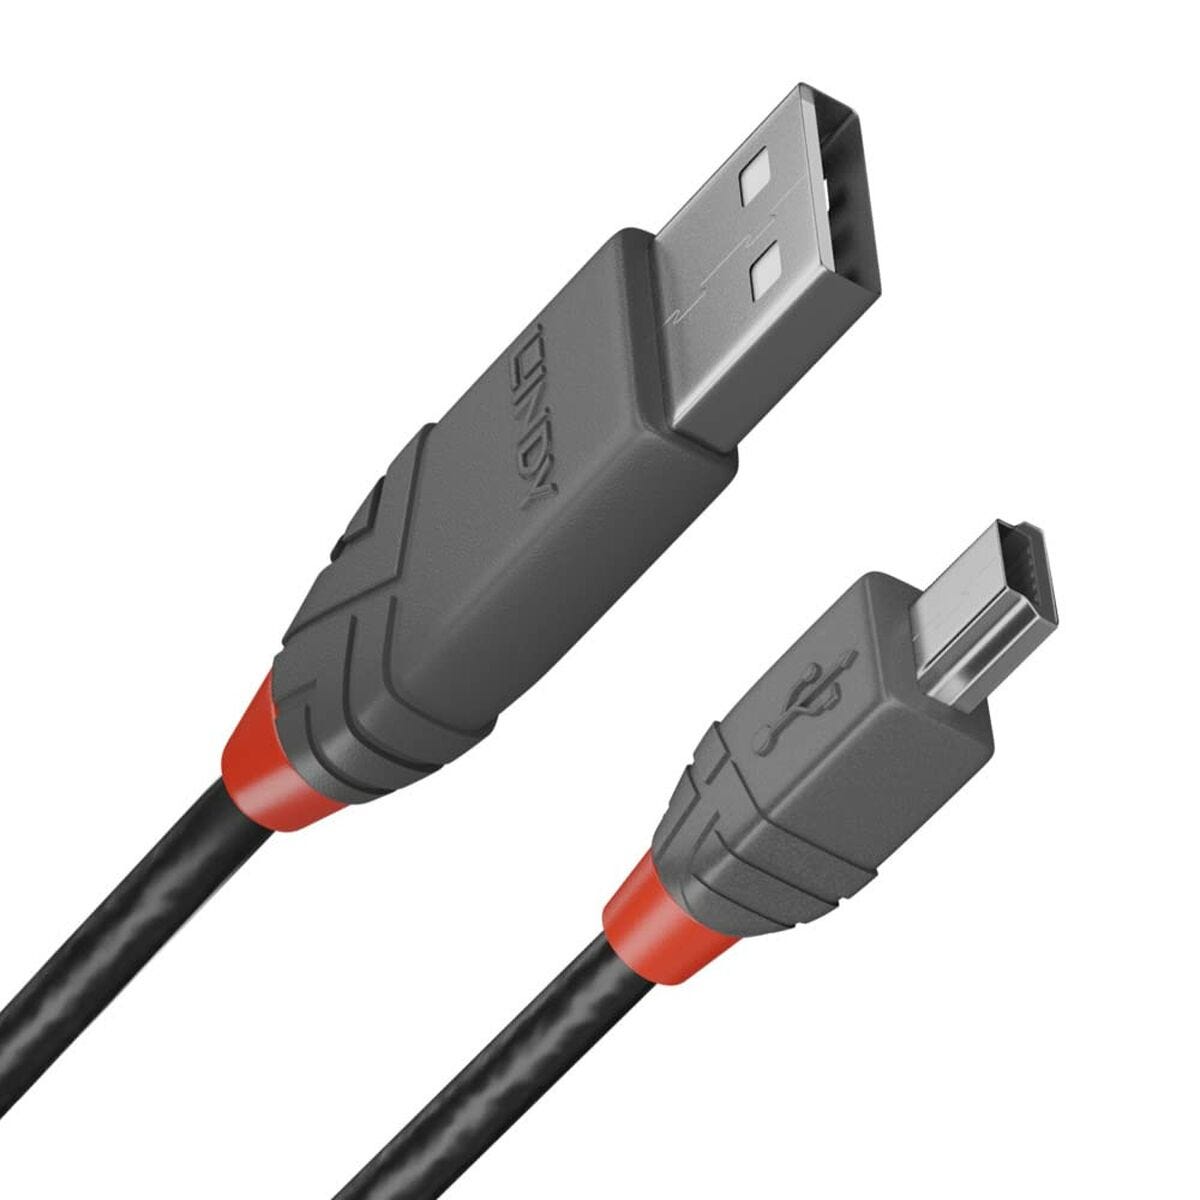 Câble USB 2.0 A vers Mini USB B LINDY 36724 3 m Noir